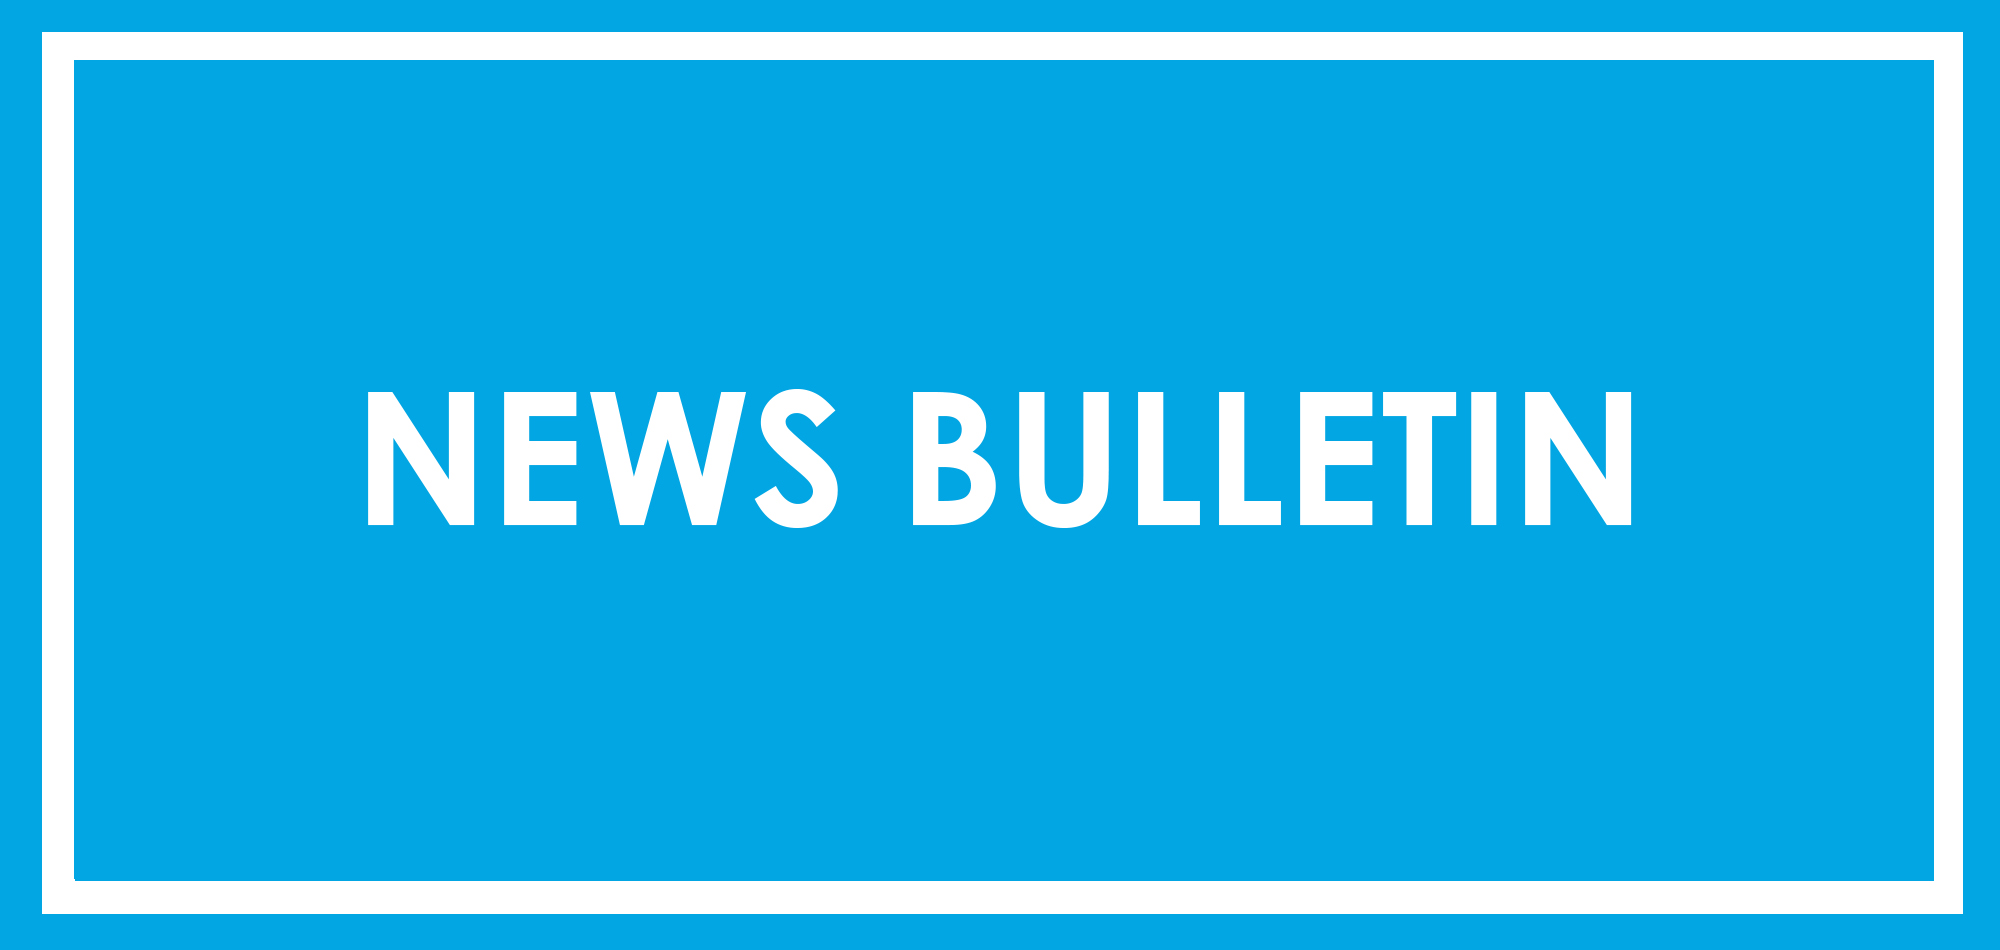 News Bulletin - 11.04.21